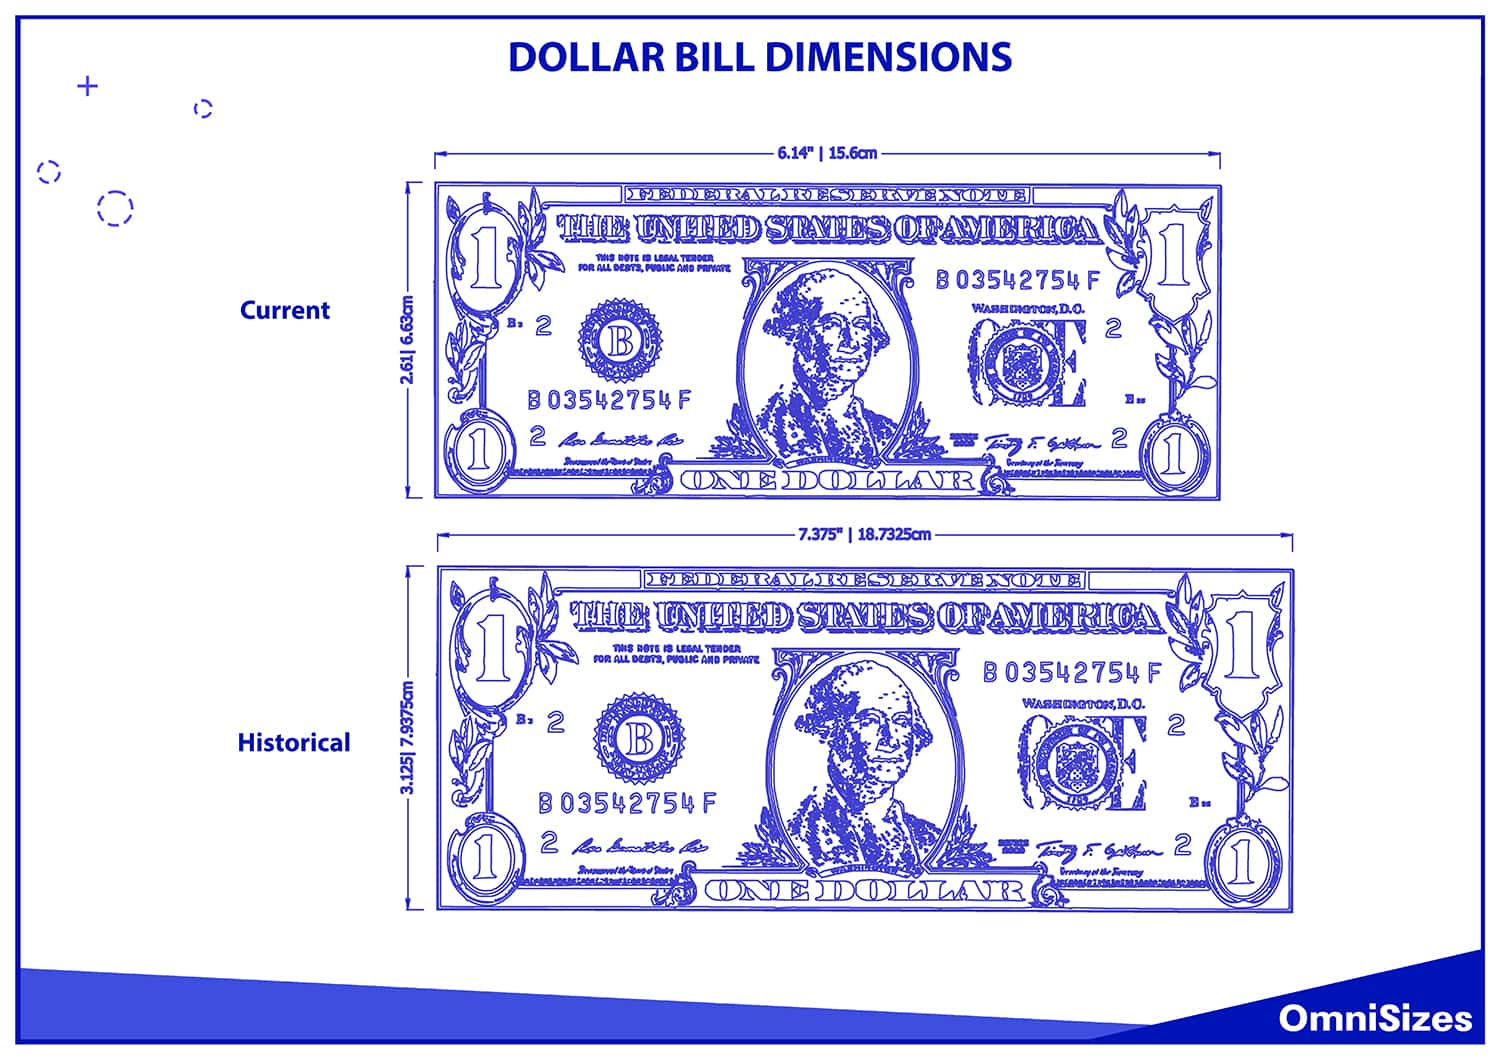 Dollar bill dimensions